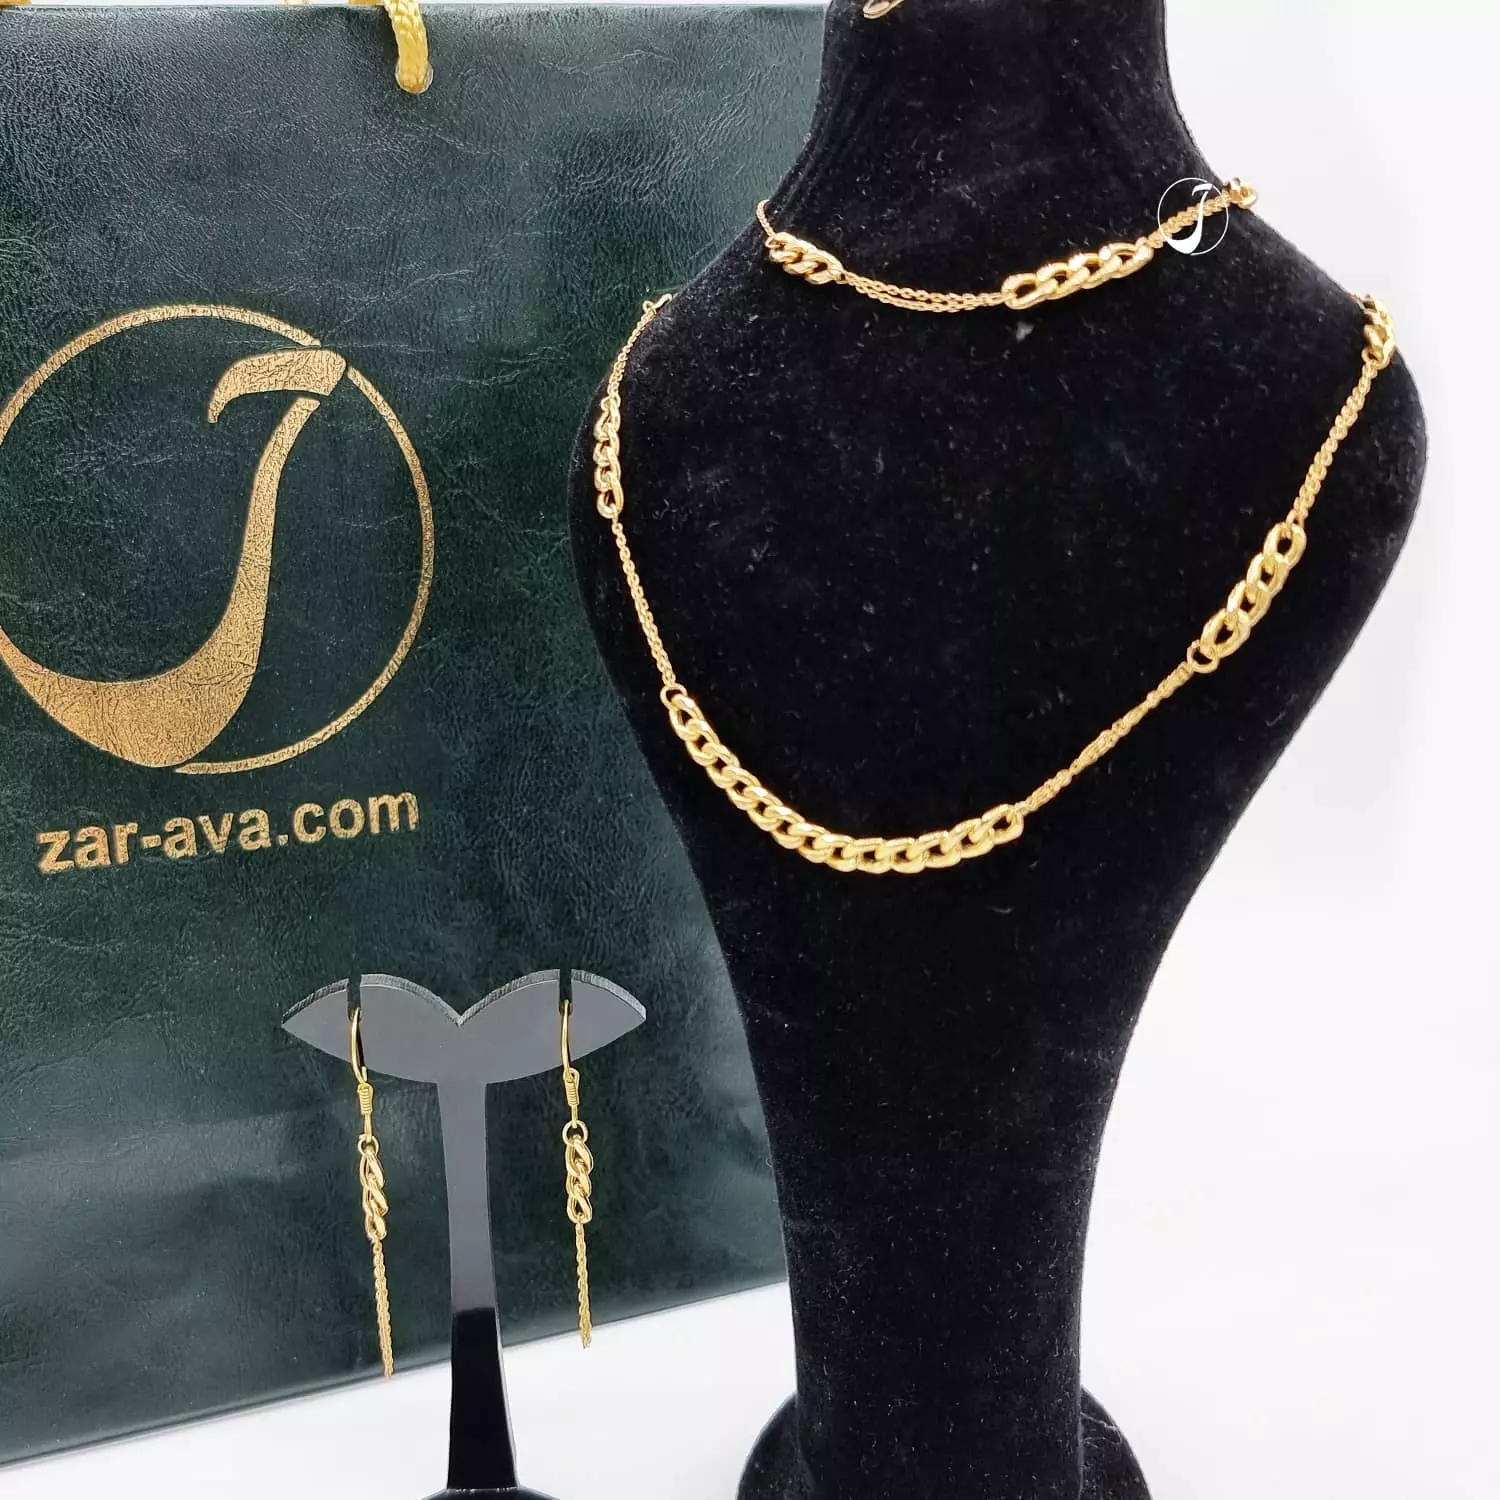 Cartier necklace and earrings set code 105 2 زرآوا فروشگاه اینترنتی و گالری طلا و جواهرات زرآوا